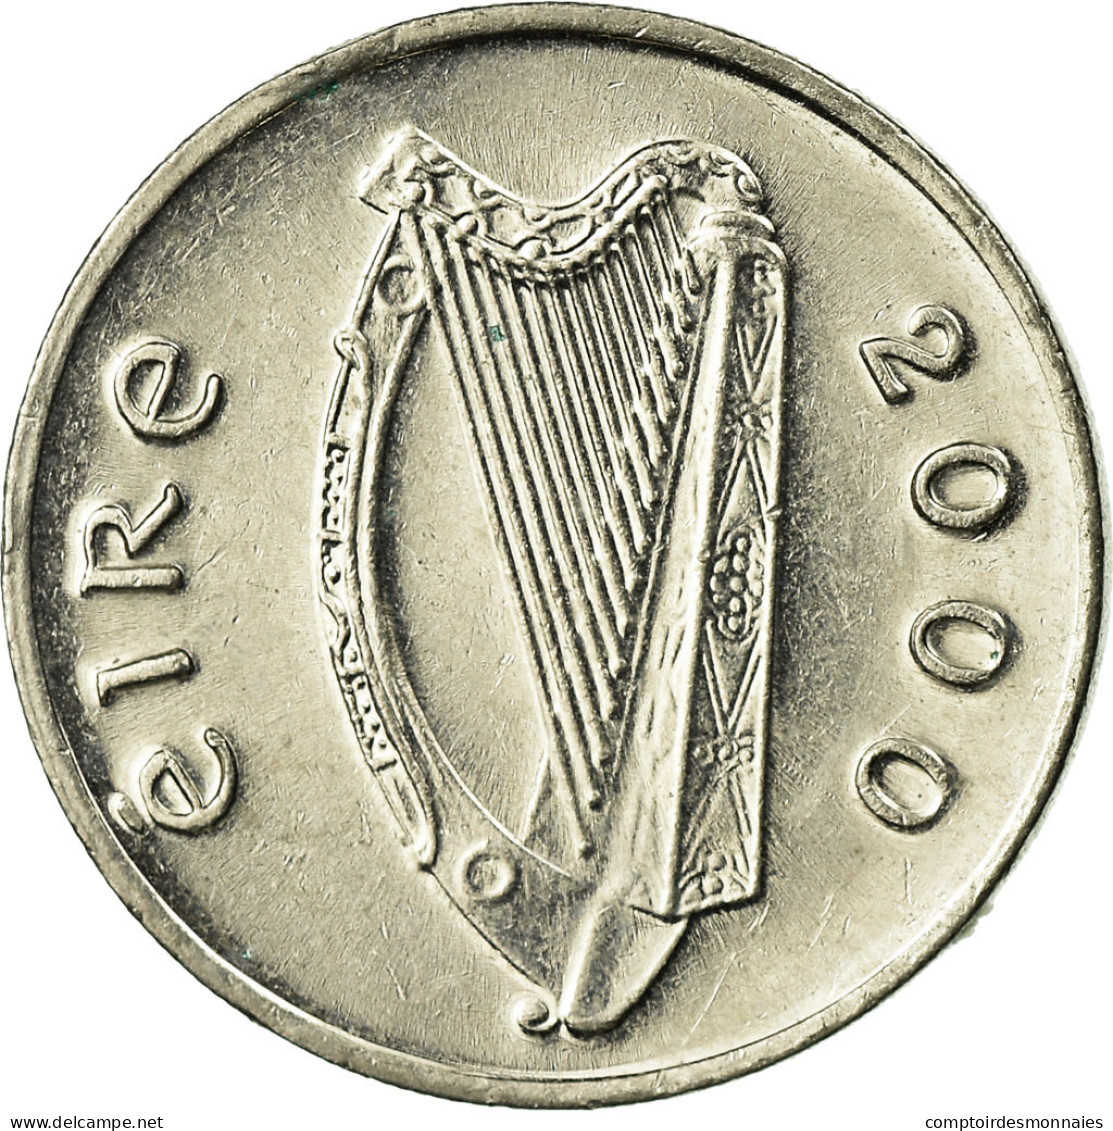 Monnaie, IRELAND REPUBLIC, 5 Pence, 2000, TTB, Copper-nickel, KM:28 - Ireland